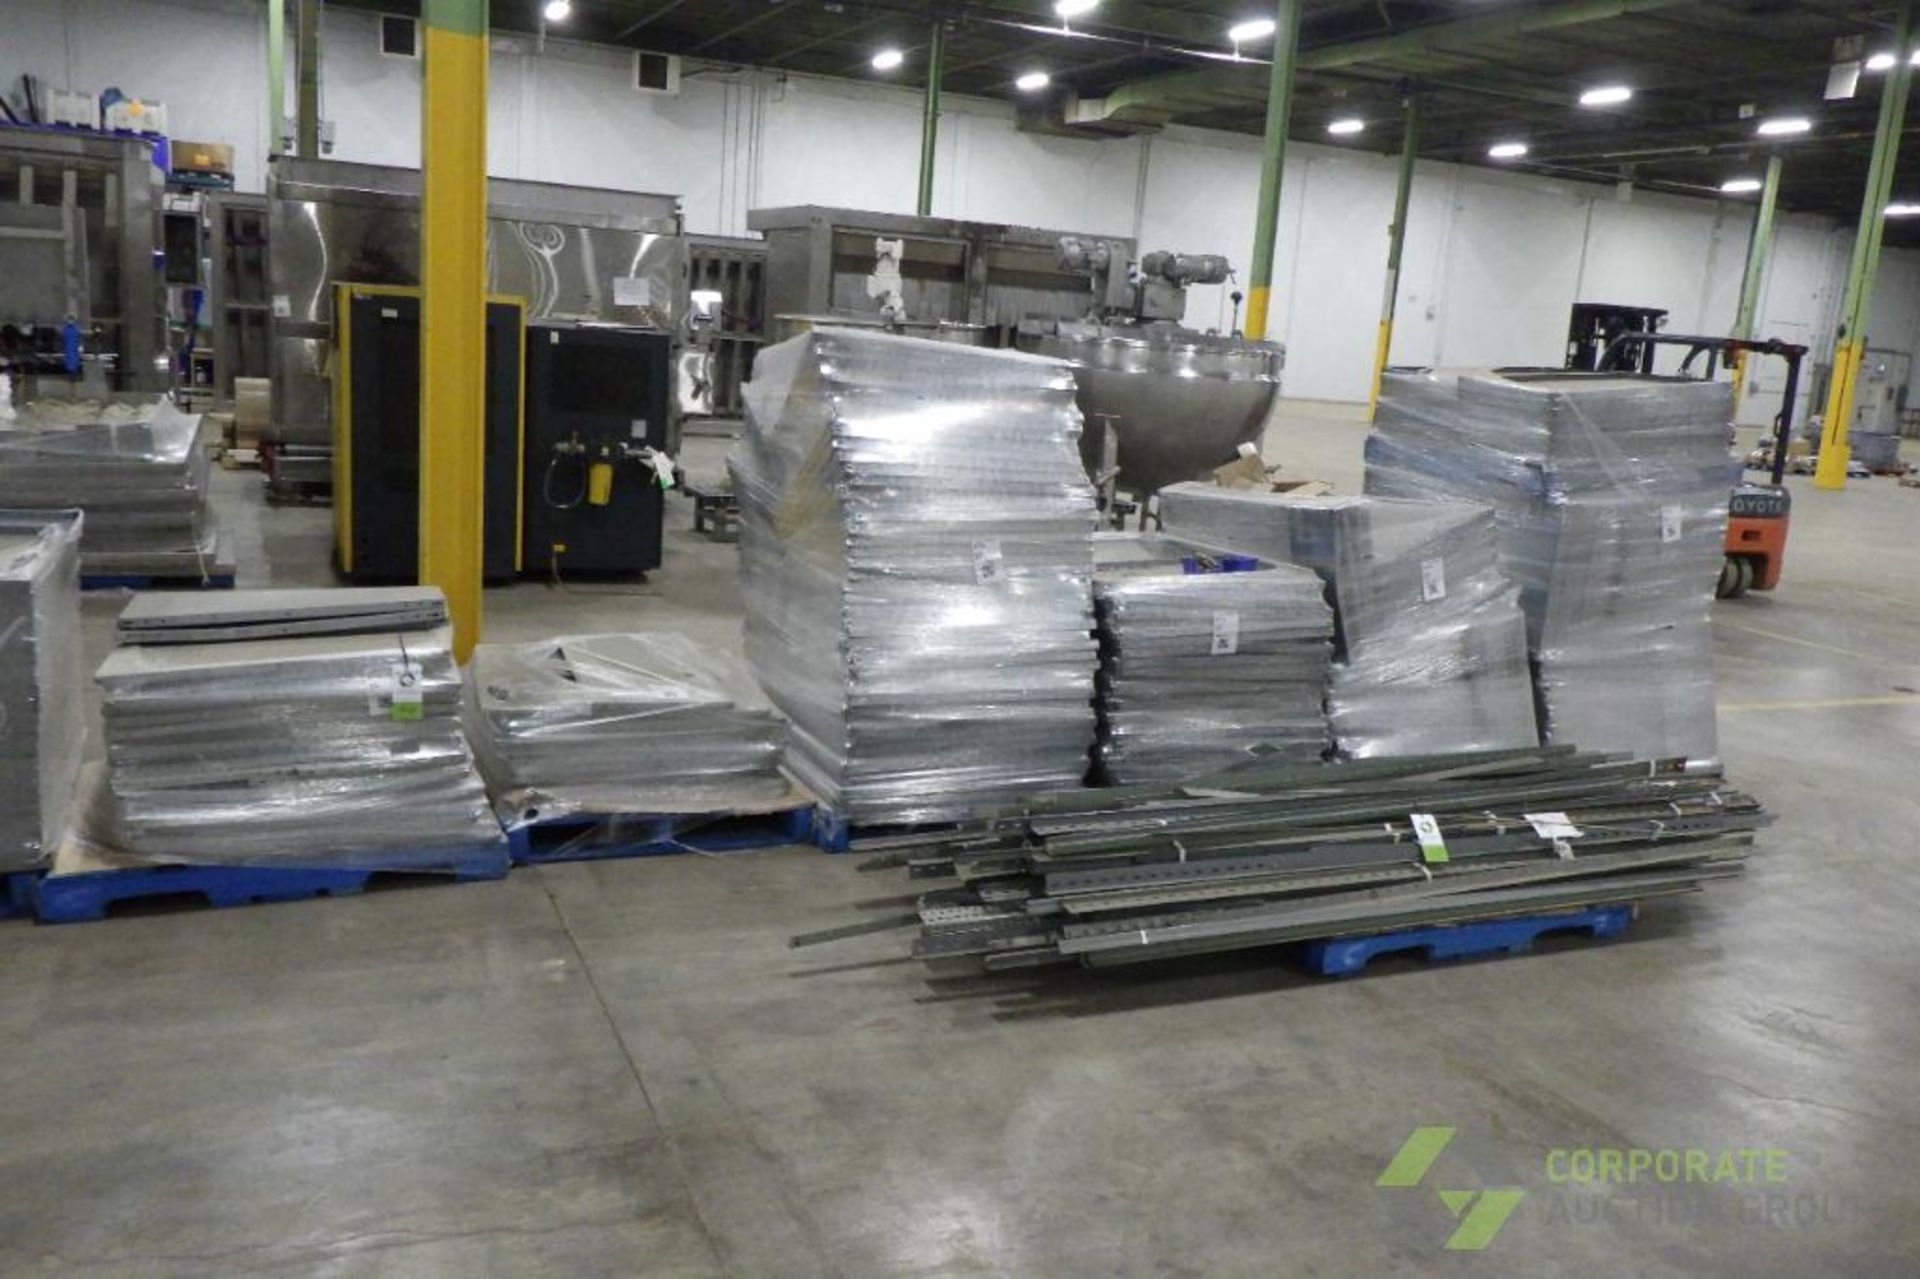 (7) pallets of steel shelving